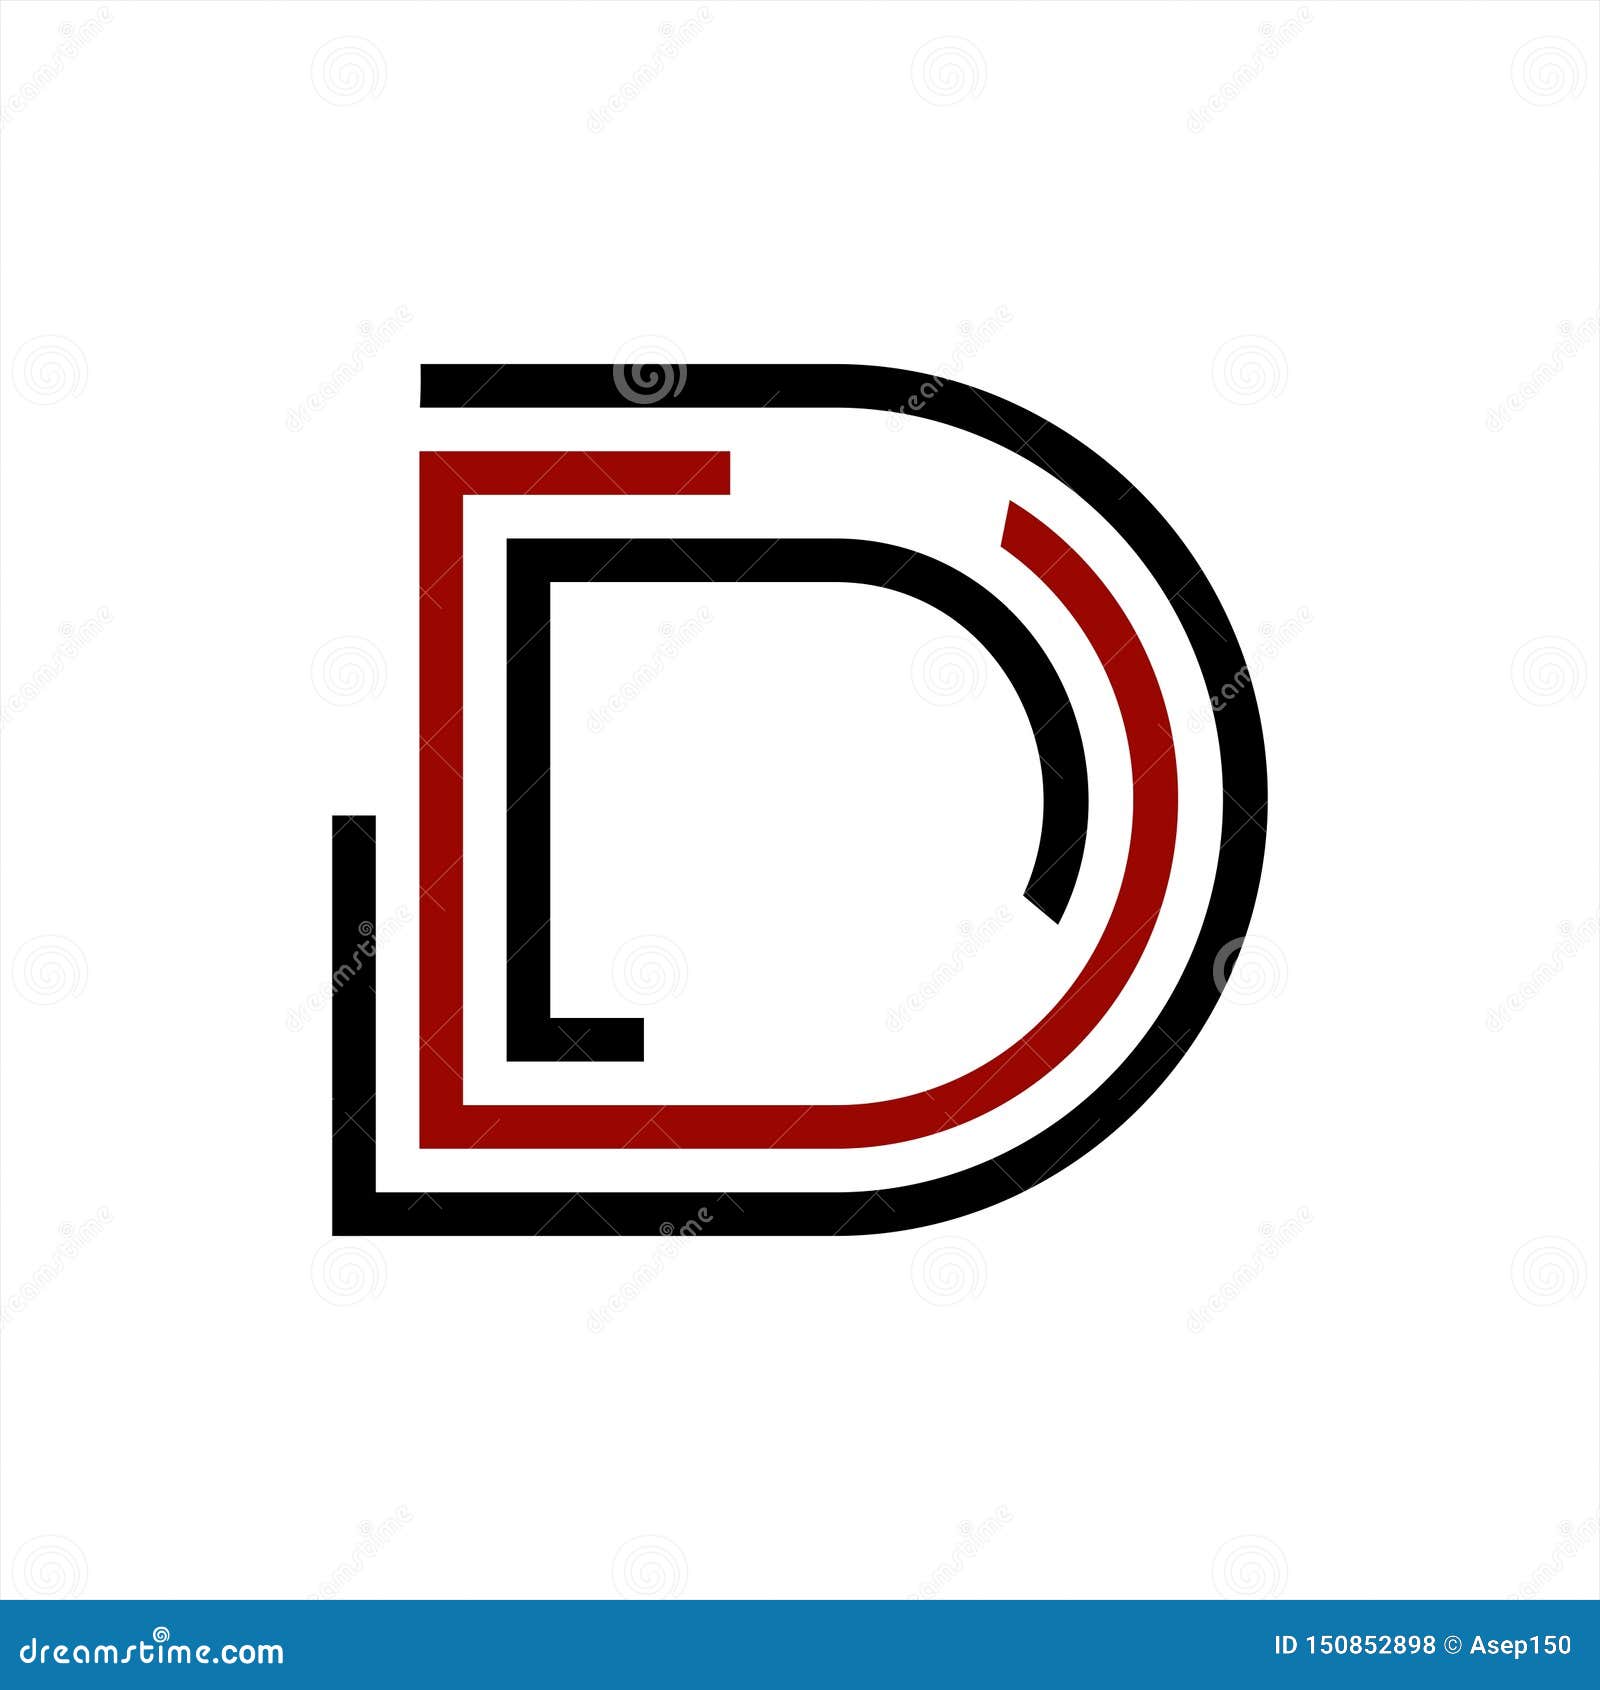 d, ddd, ccd, dcc initials geometric network line and digital data logo